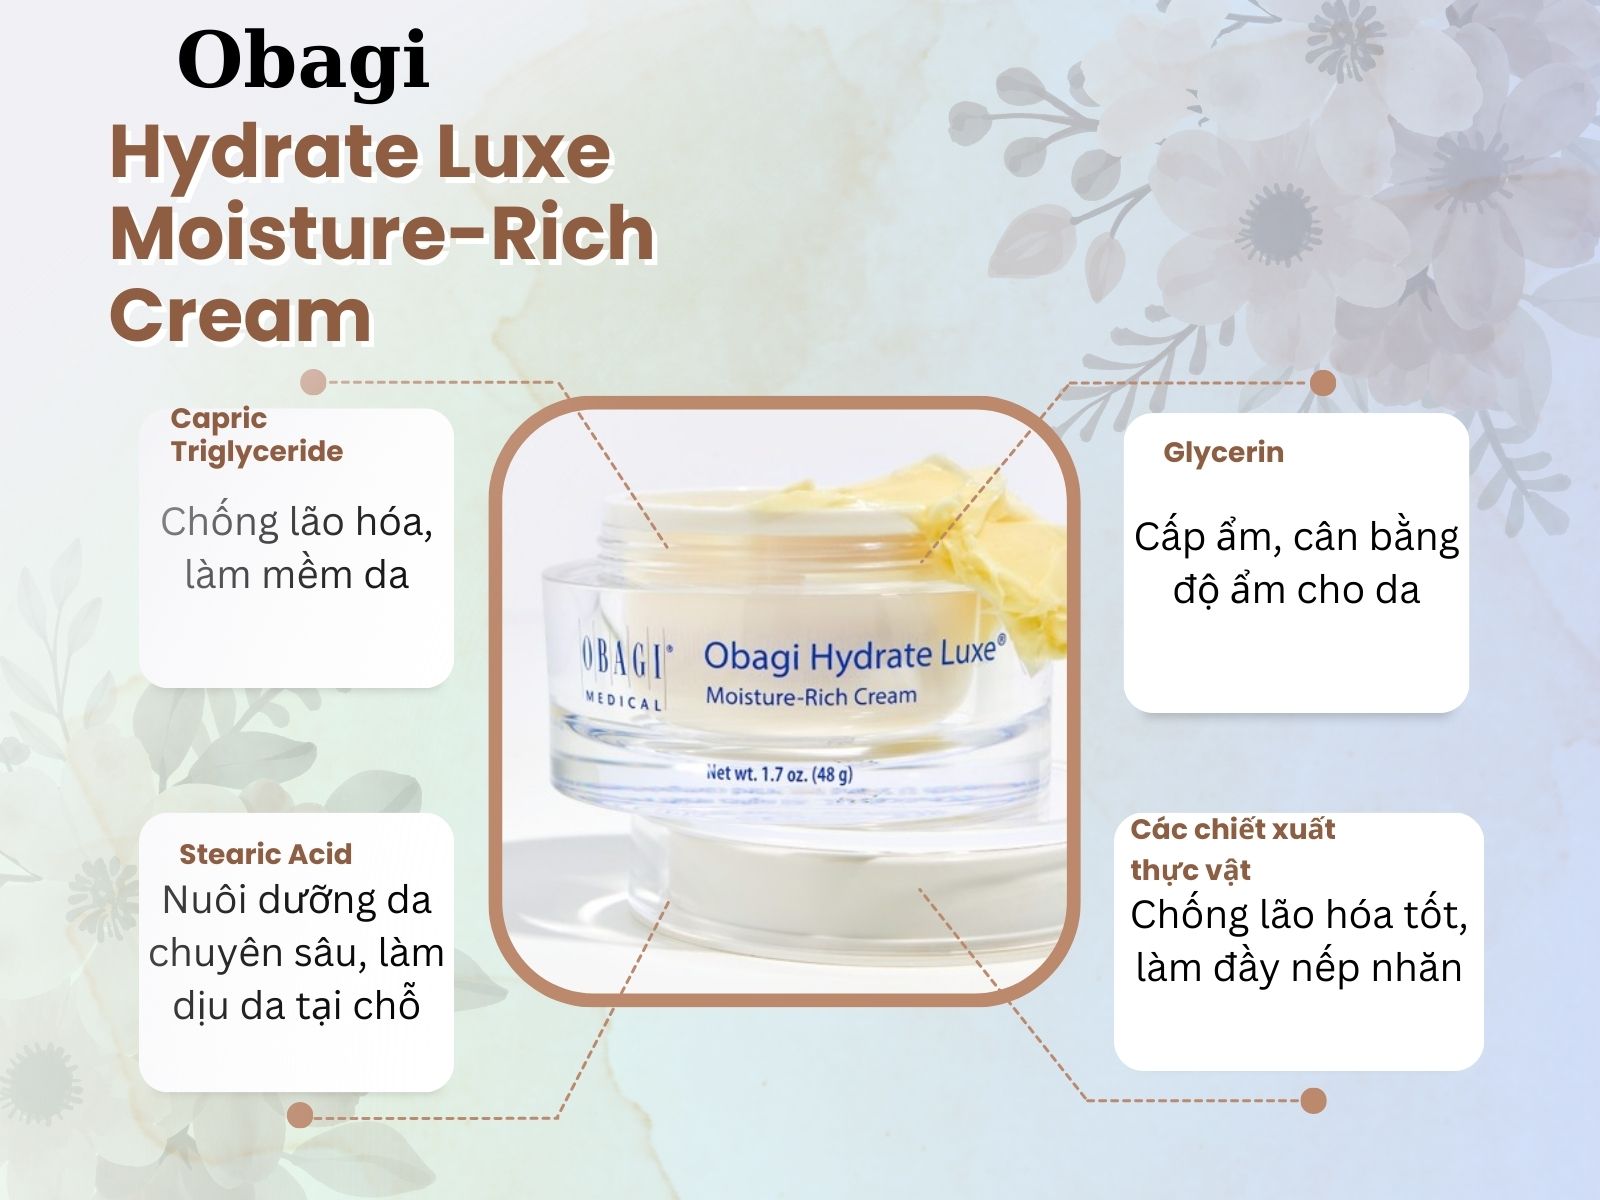 Thành phần của Obagi Hydrate Luxe Moisture-Rich Cream